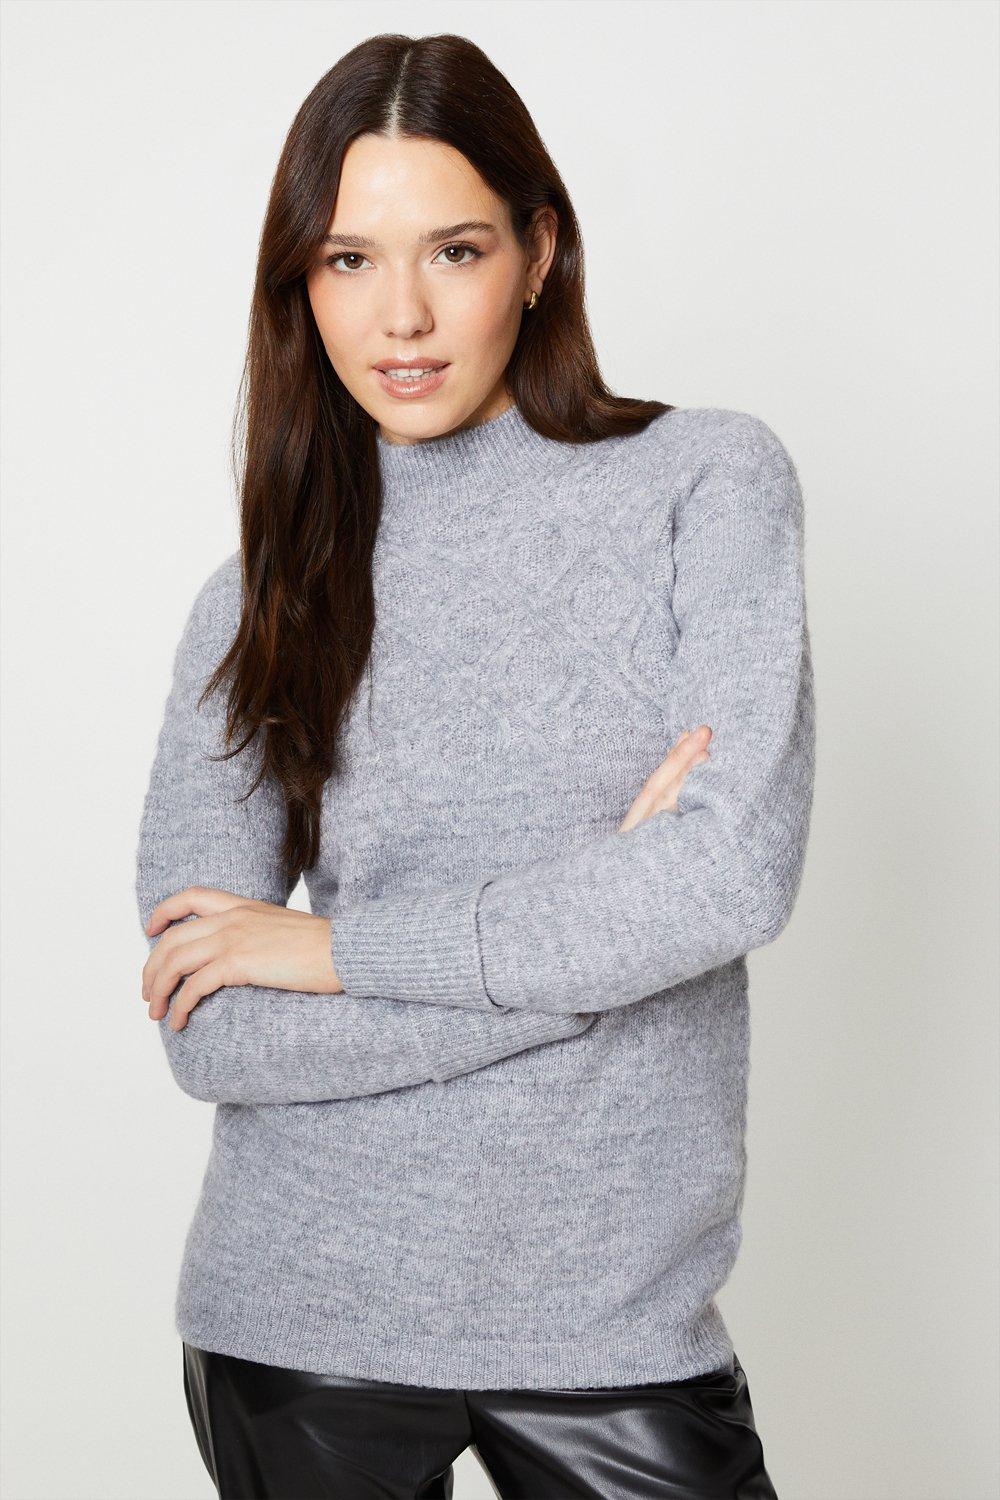 Women's Mix Cable Stitch Longline Knitted Tunic - grey marl - M